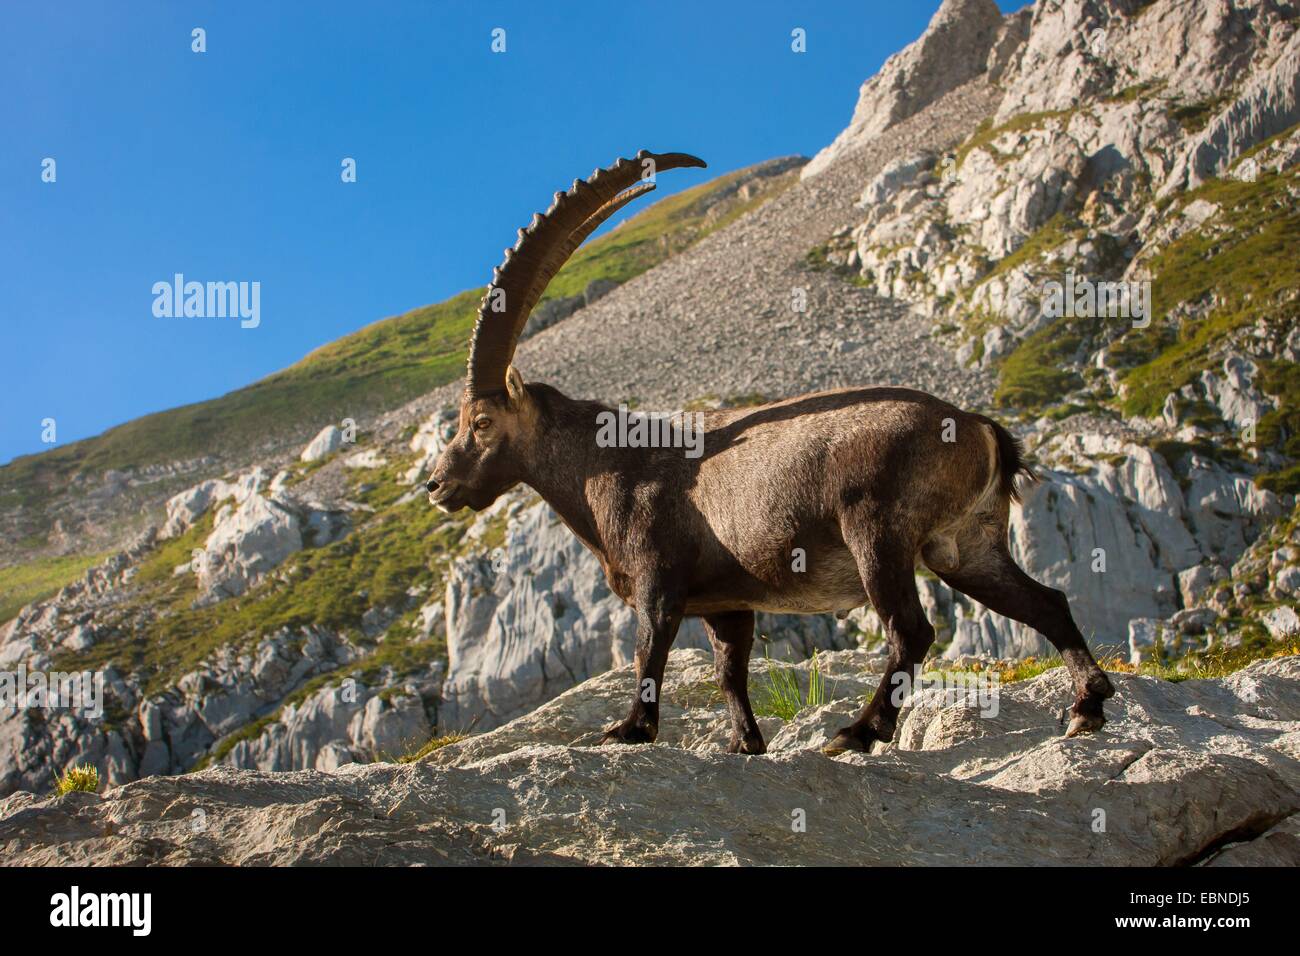 Bouquetin des Alpes (Capra ibex, Capra ibex ibex), buck debout sur un rocher contre un ciel bleu, la Suisse, l'Alpstein, Saentis Banque D'Images